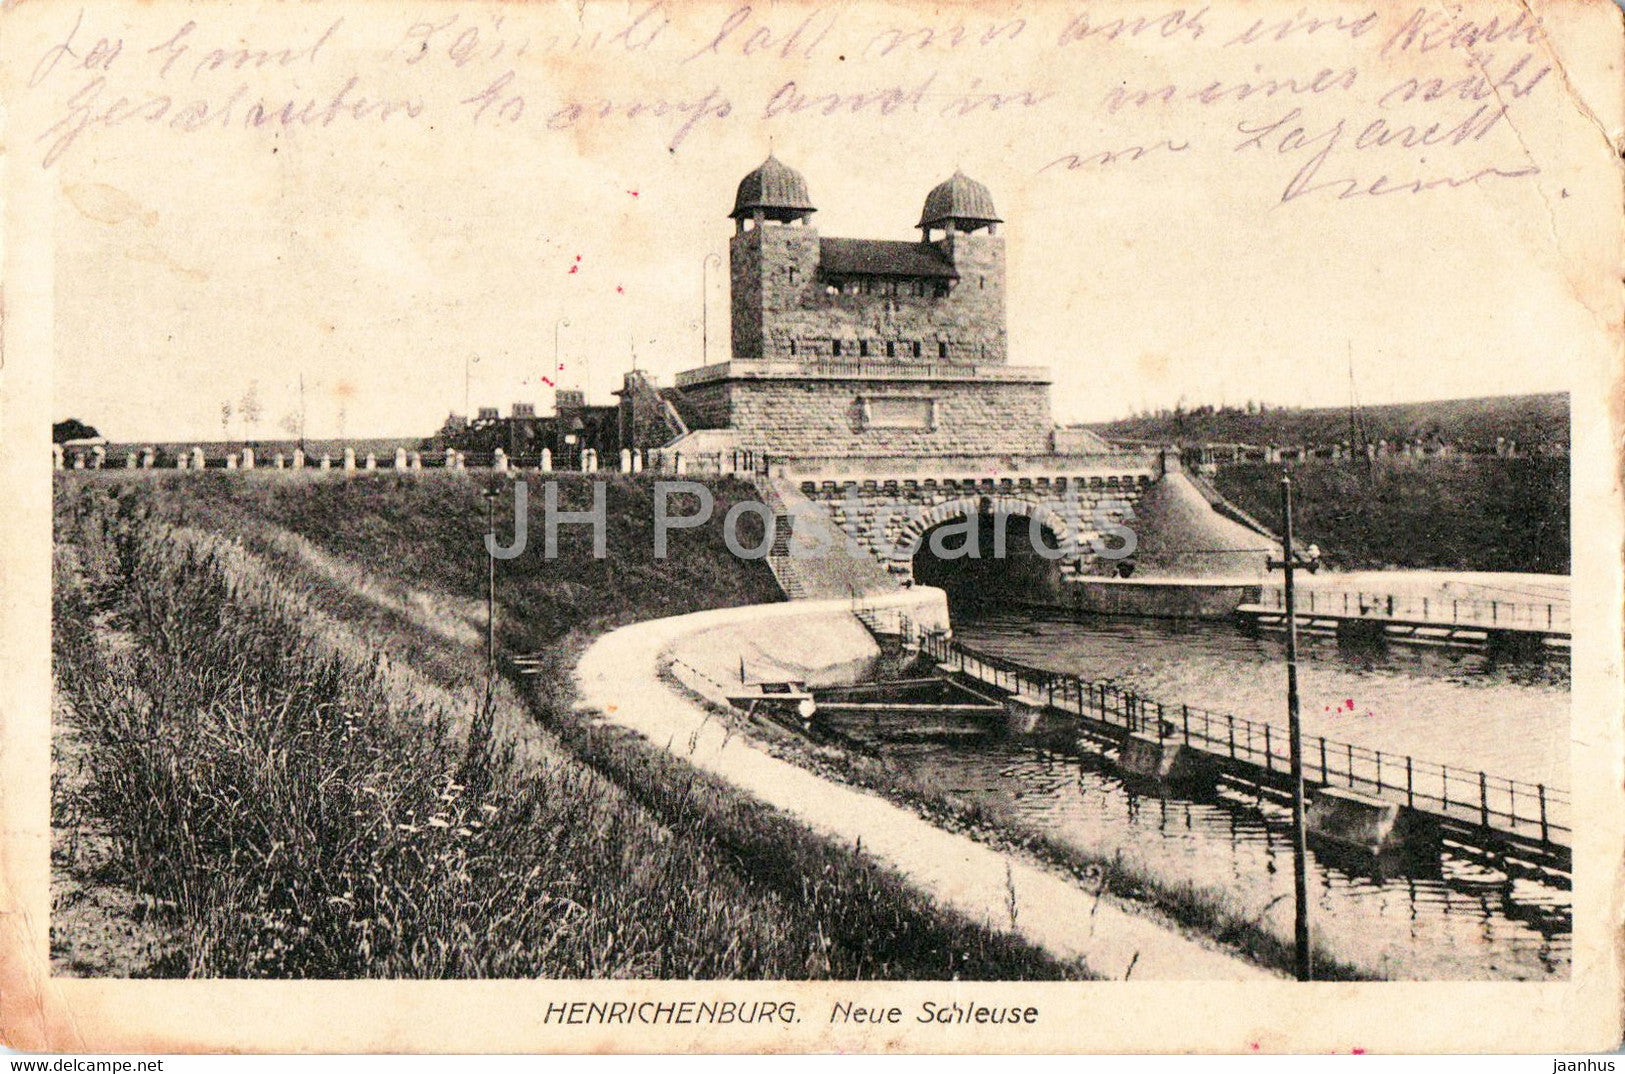 Henrichenburg - Neue Schleuse - Feldpost - XIV Armeekorps - 1917 - old postcard - Germany - used - JH Postcards